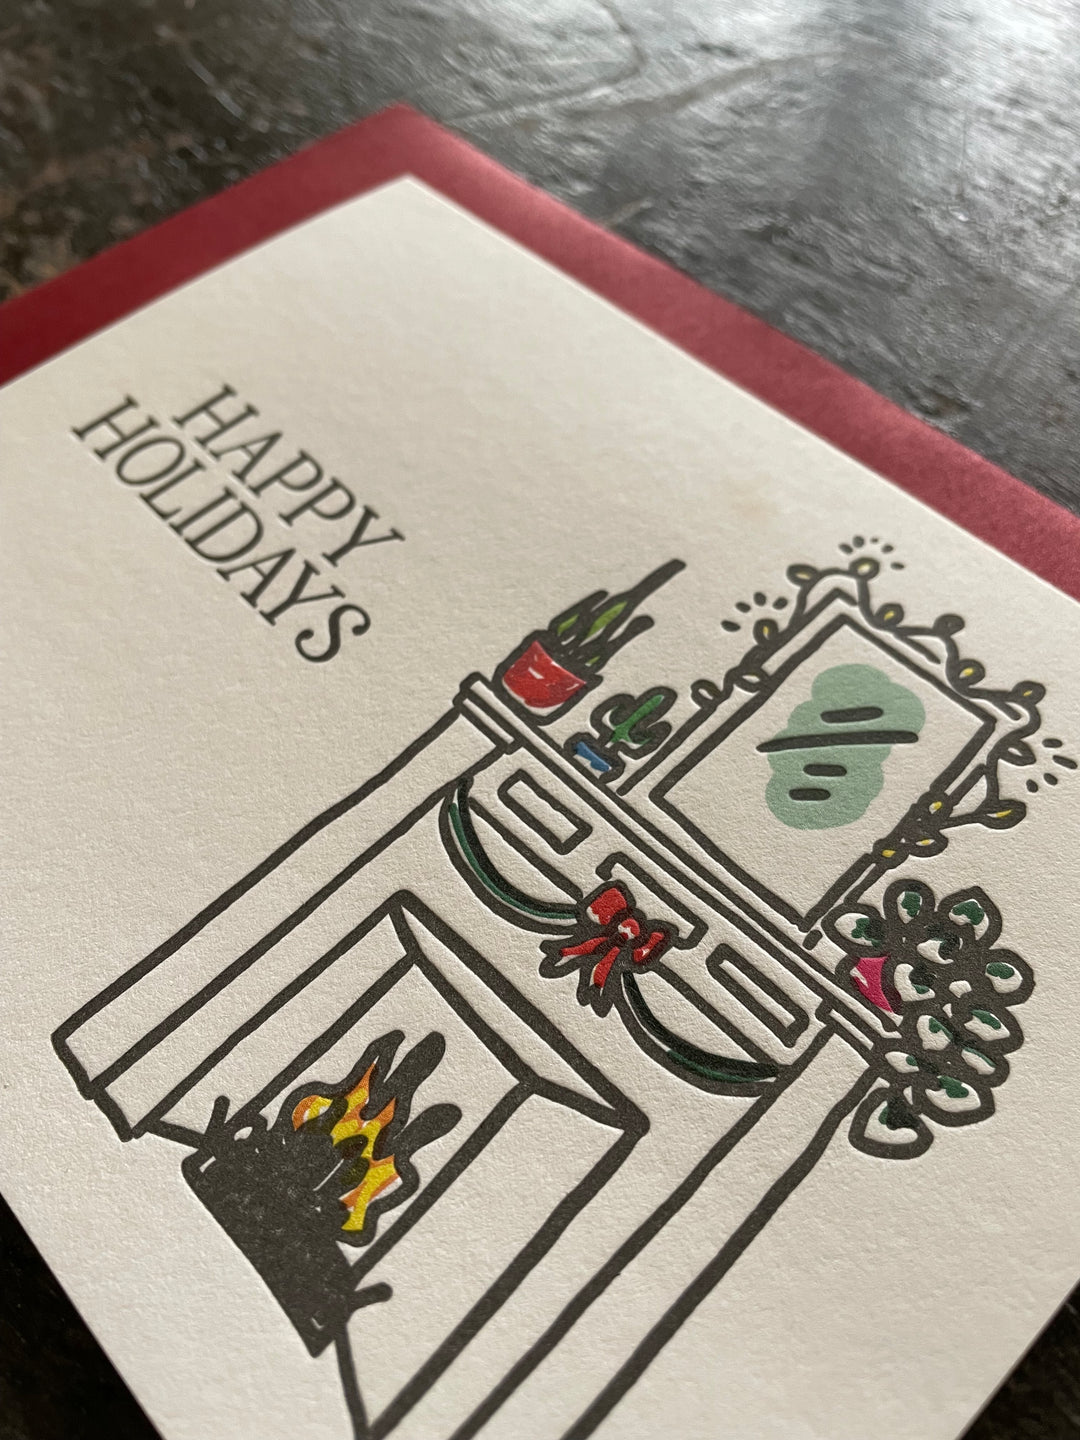 Happy Holidays Letterpress Card